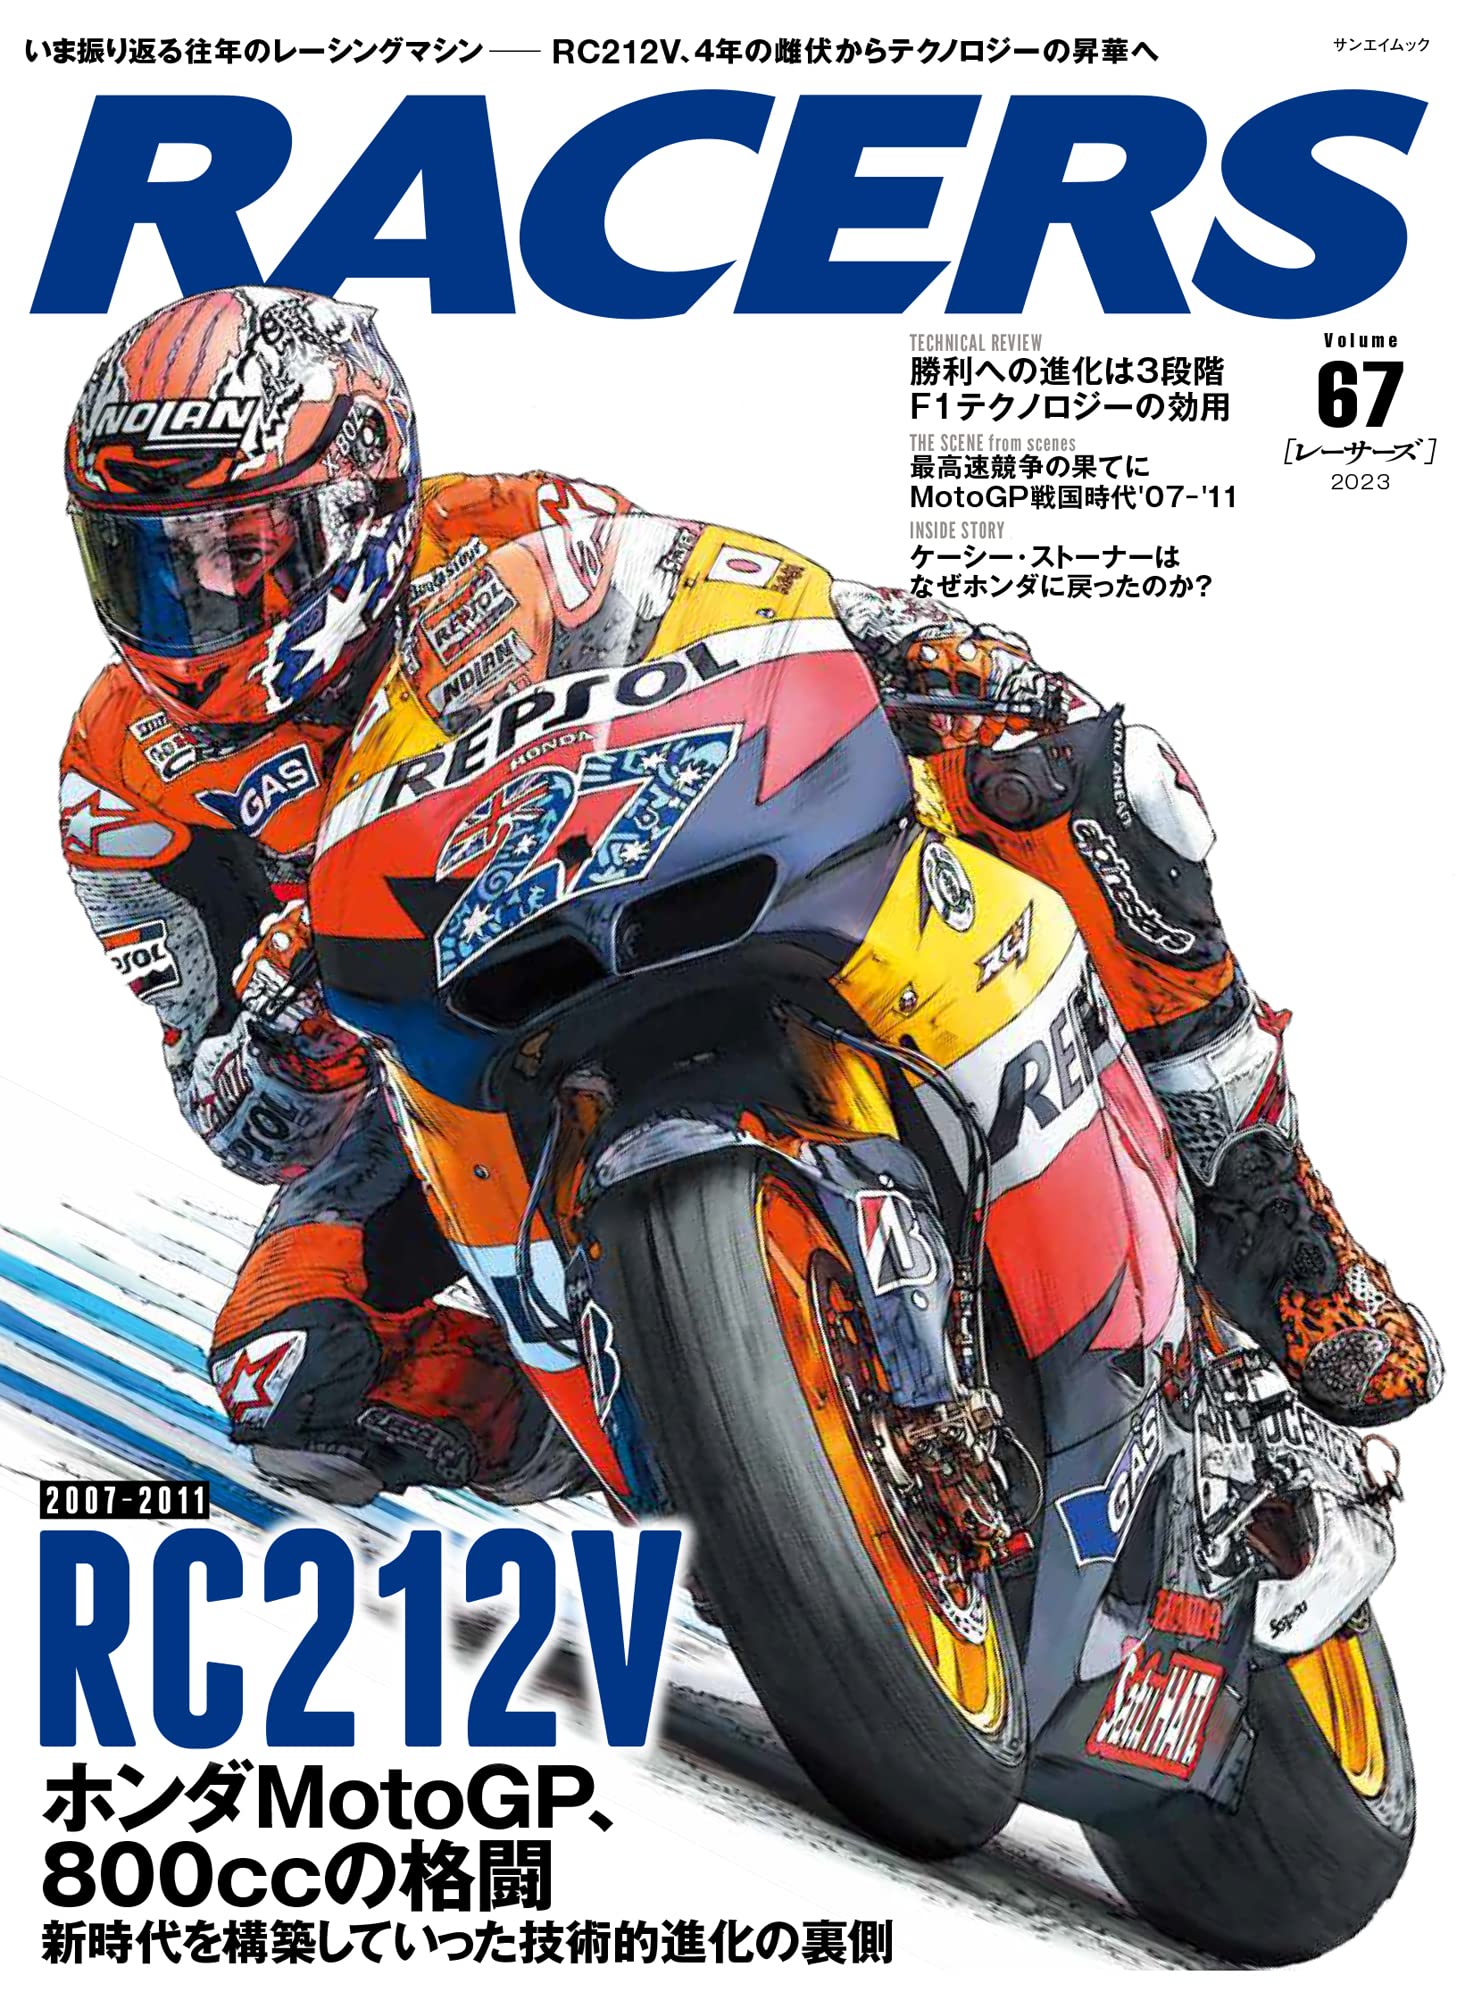 RACERS - レ-サ-ズ - Vol.67 2007-2011 RC212V (サンエイムック)